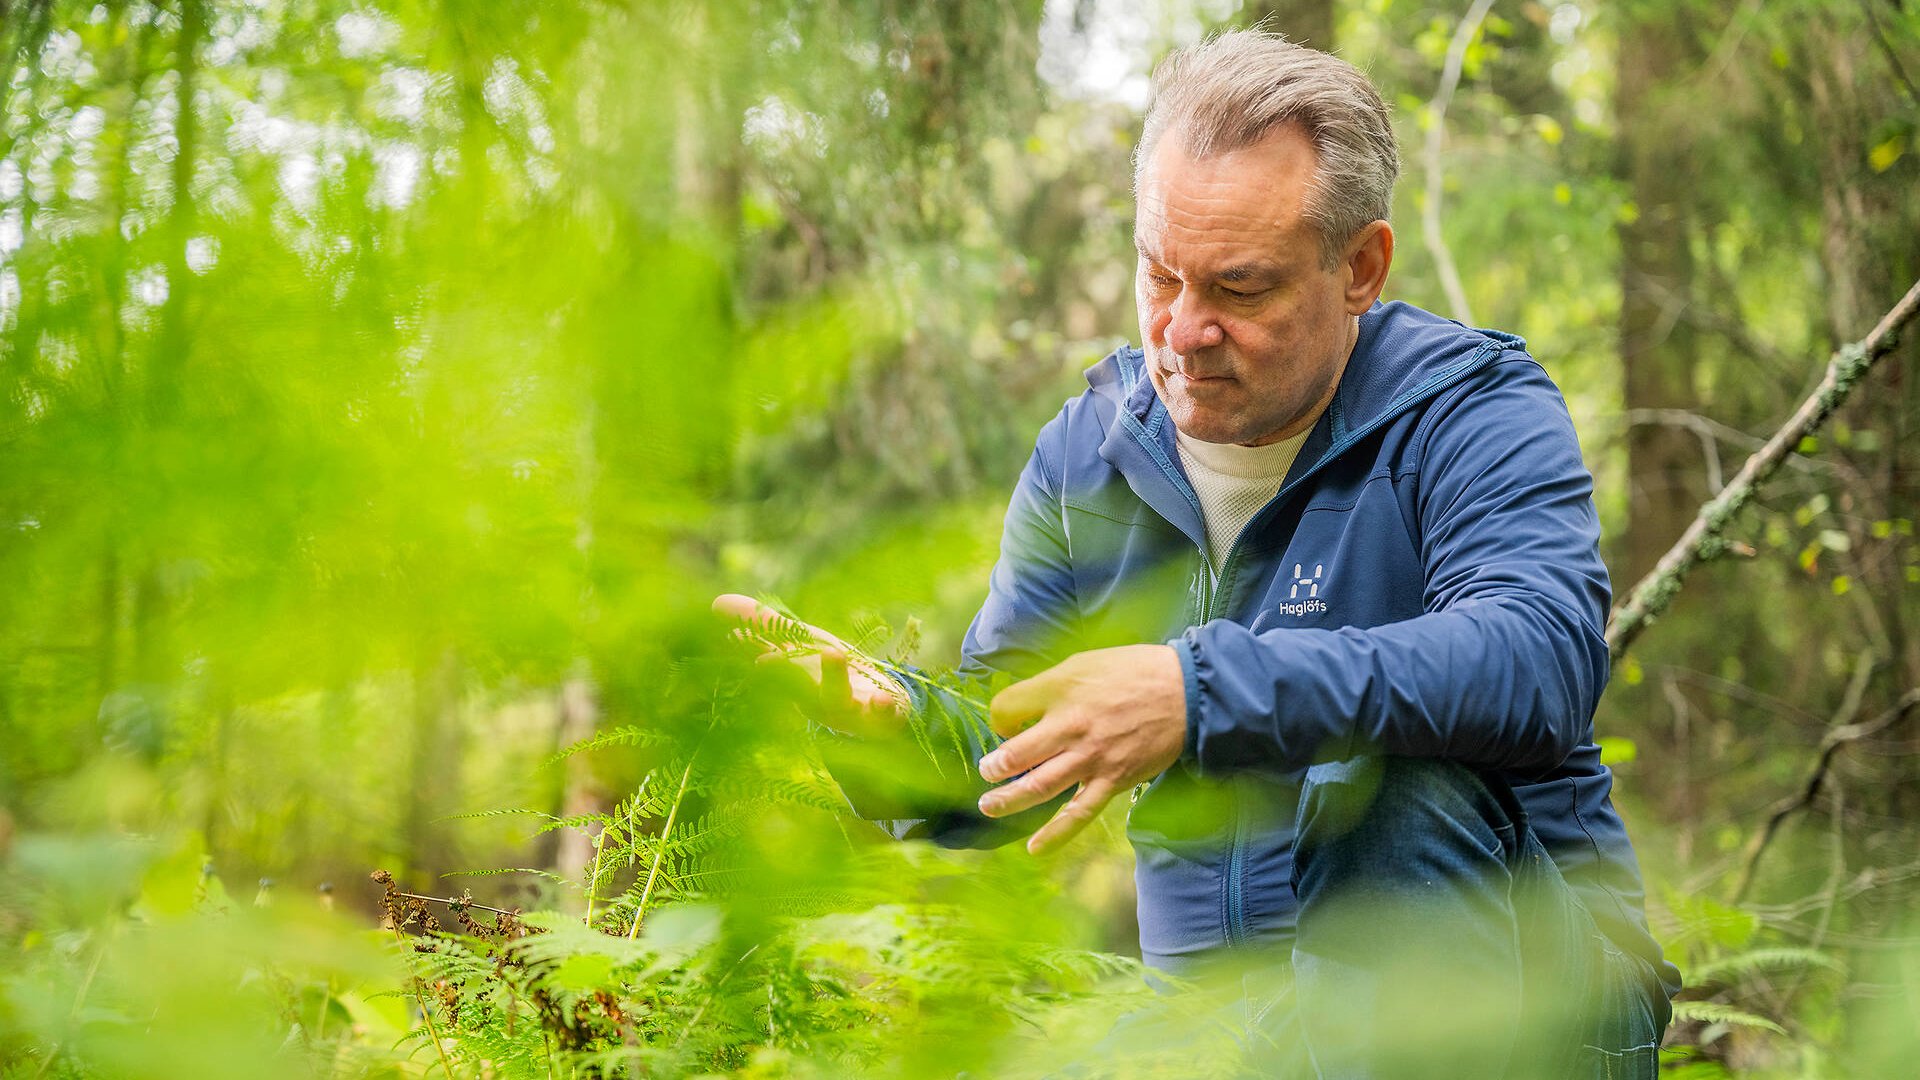 Timo Lehesvirta is Metsä Group’s leading nature expert